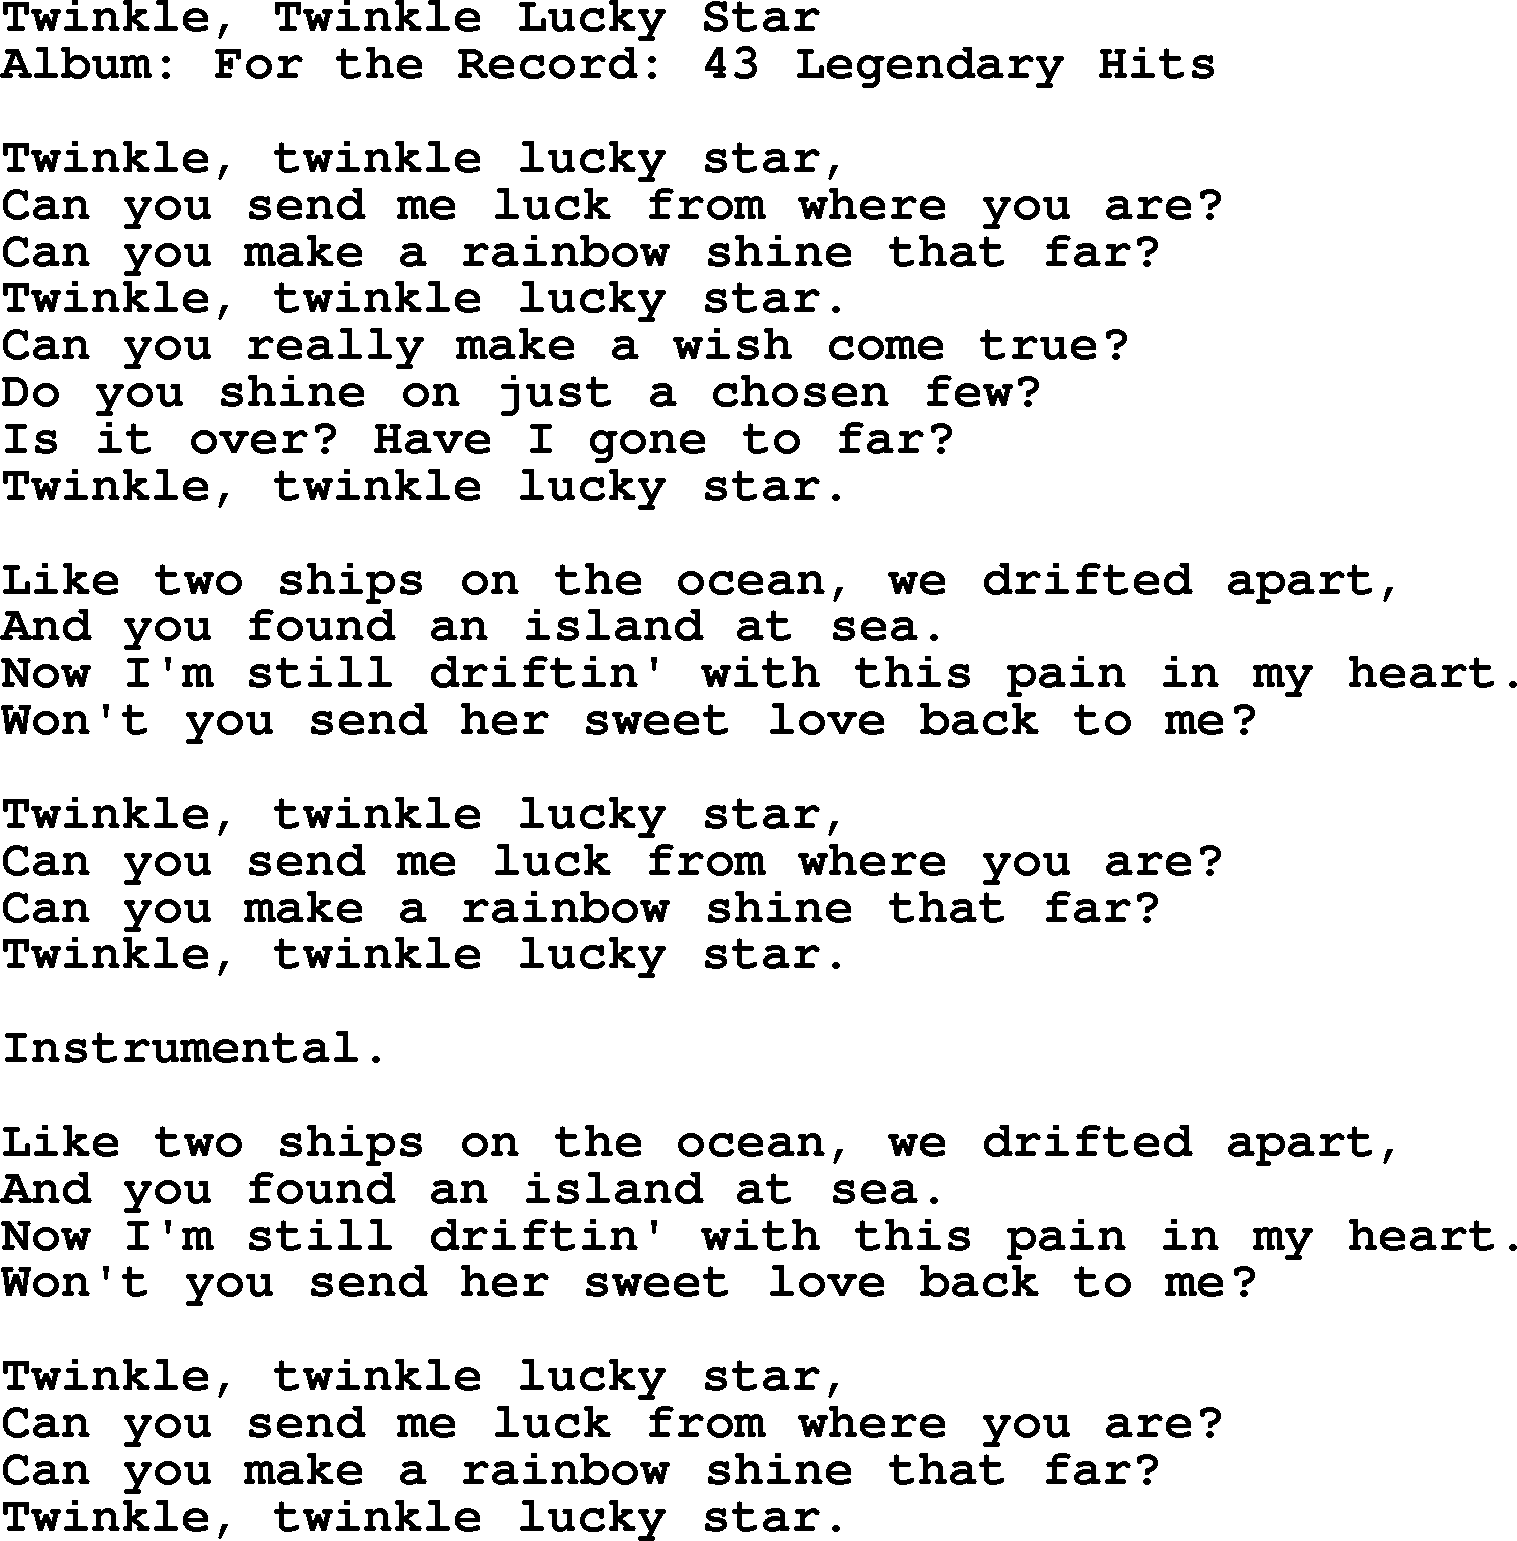 Merle Haggard song: Twinkle, Twinkle Lucky Star, lyrics.